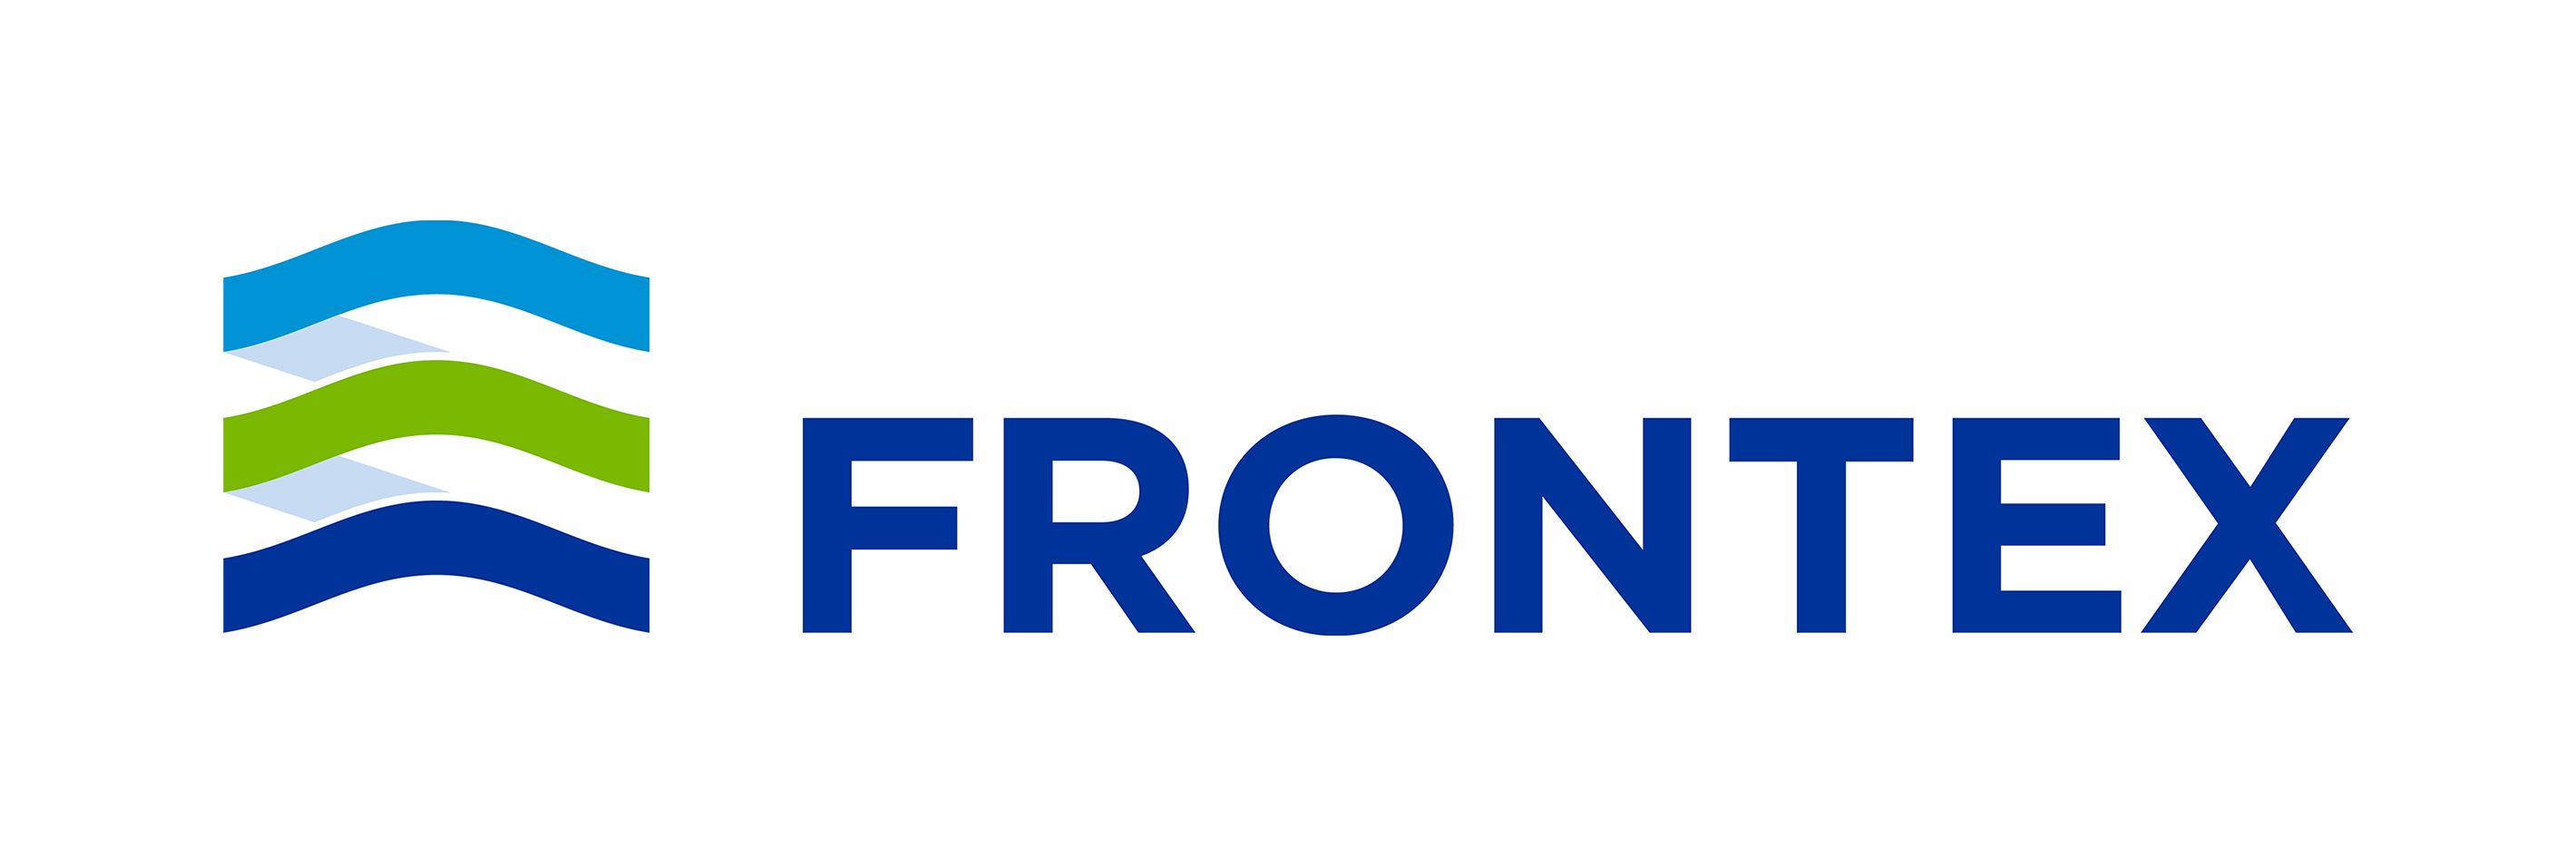 frontex_logo